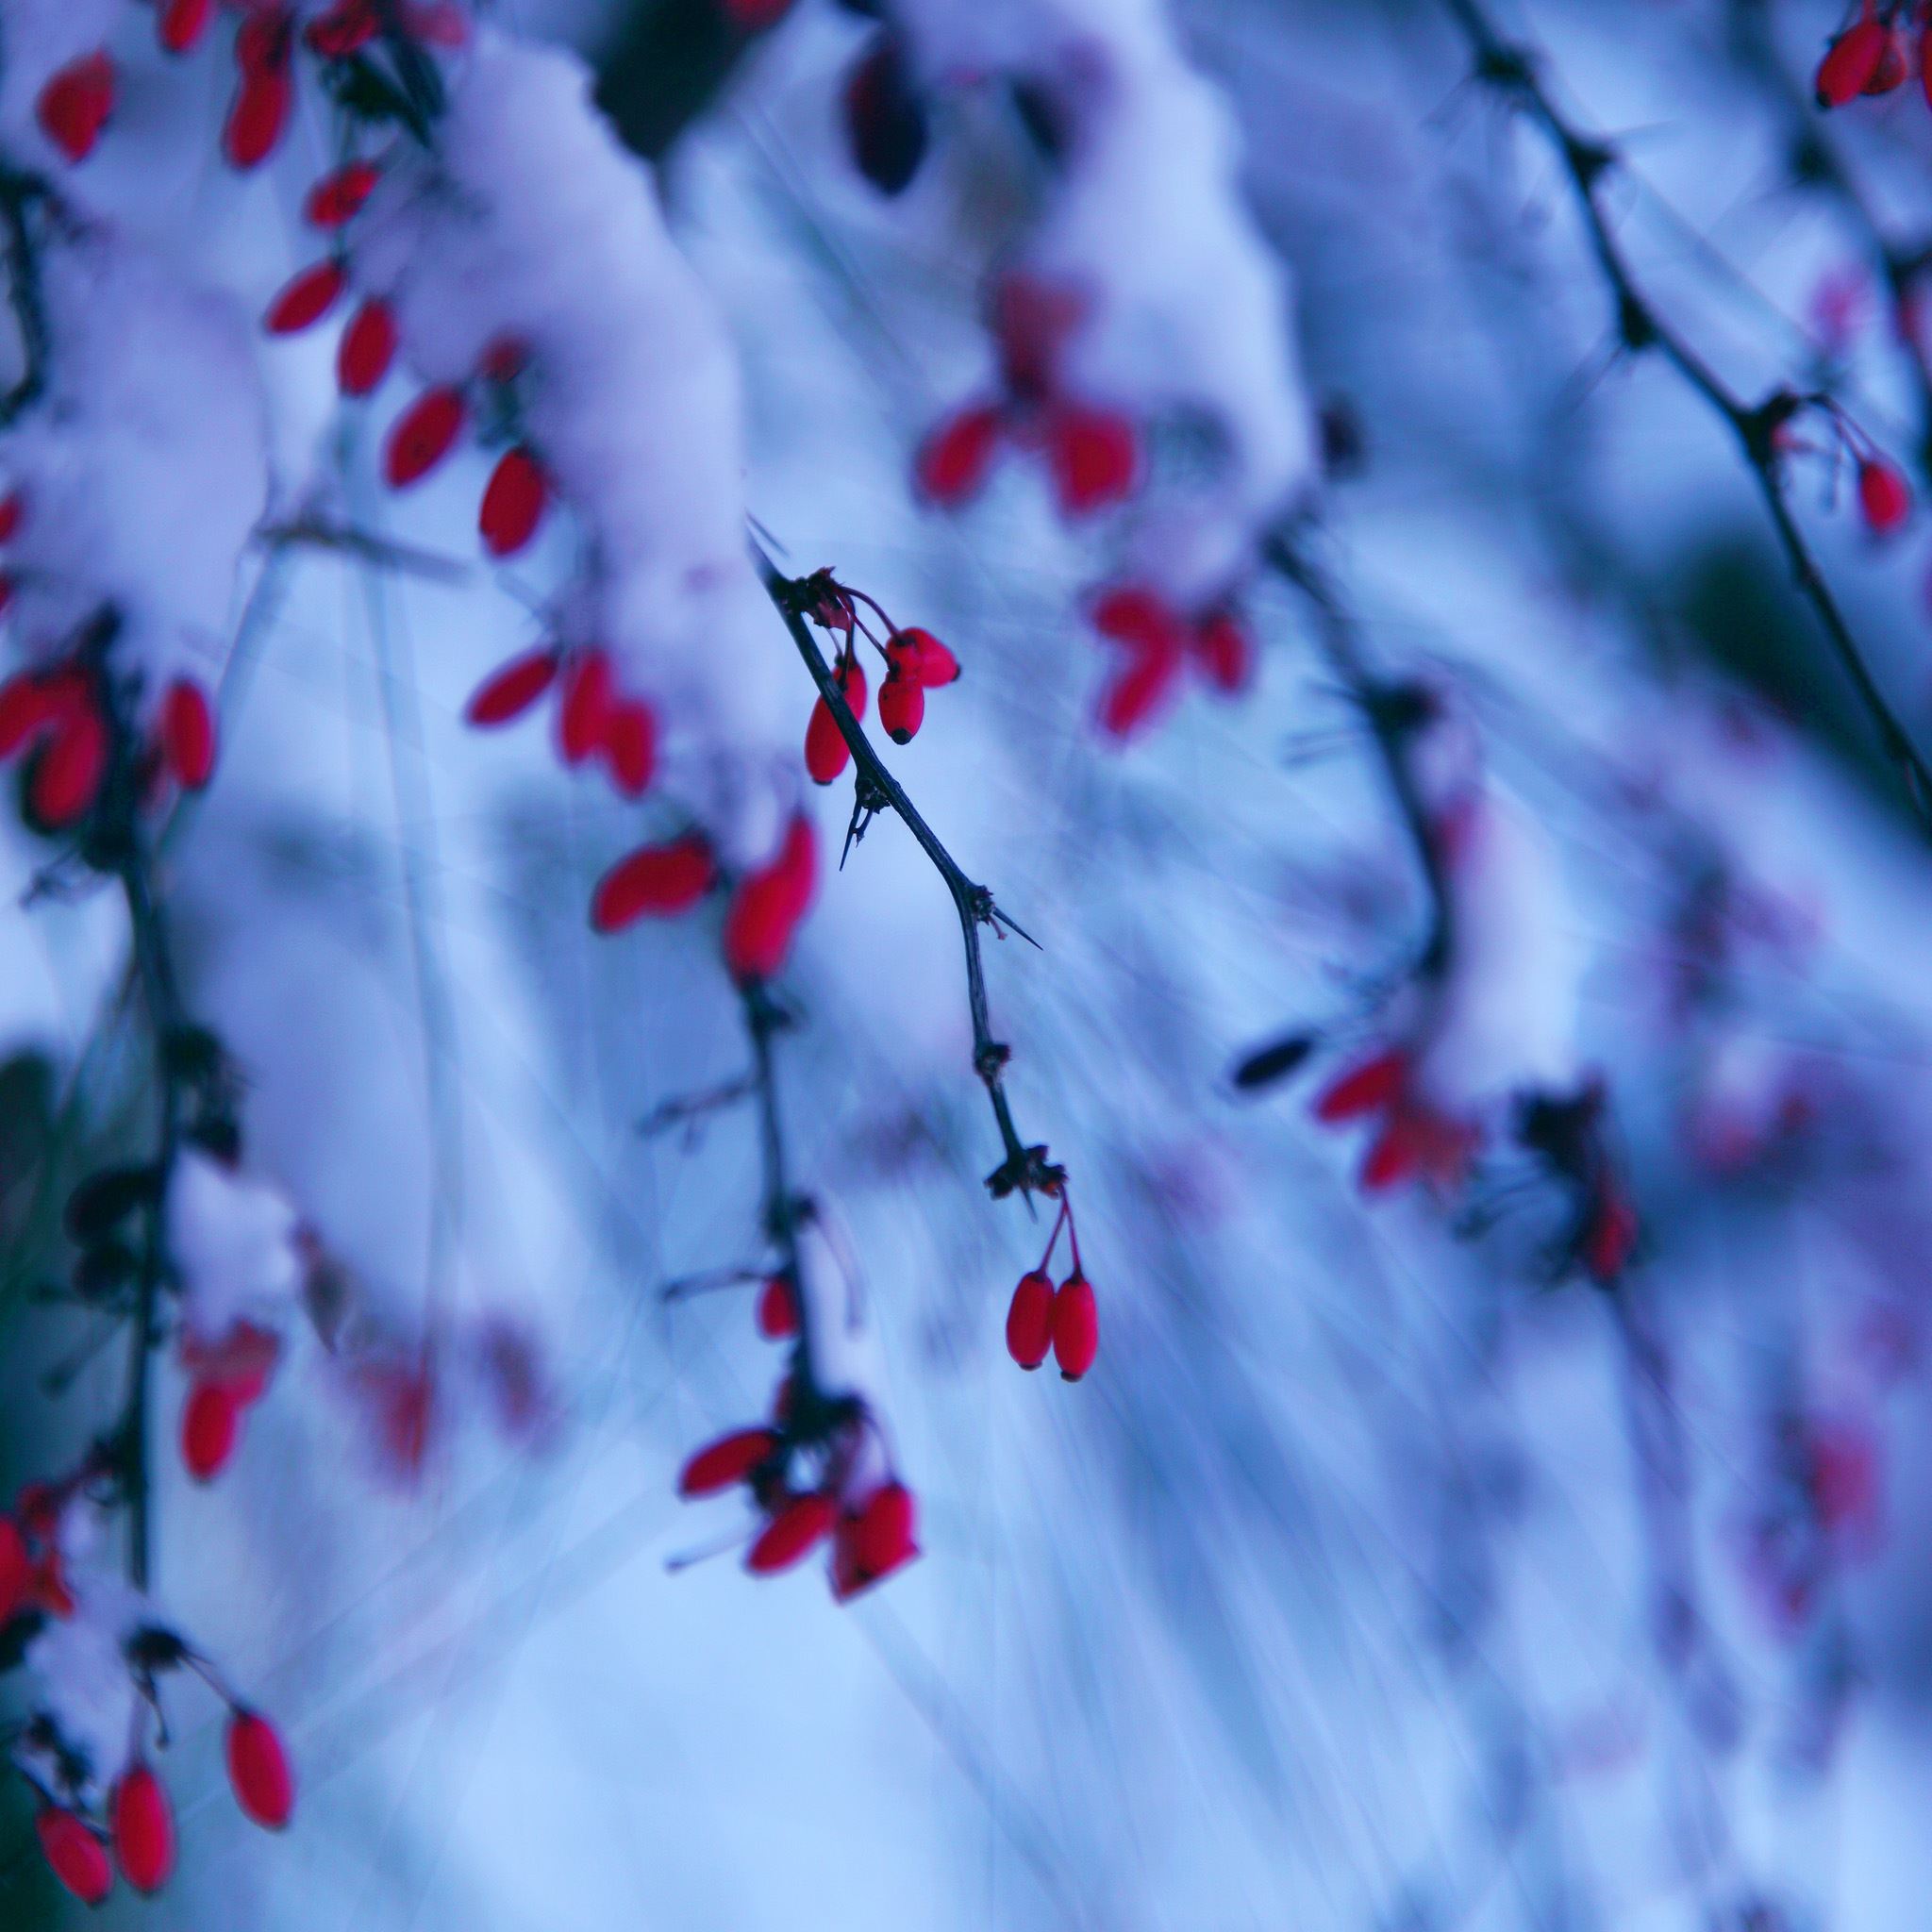 Winter Snowy Red Berries Branch iPad Air wallpaper 